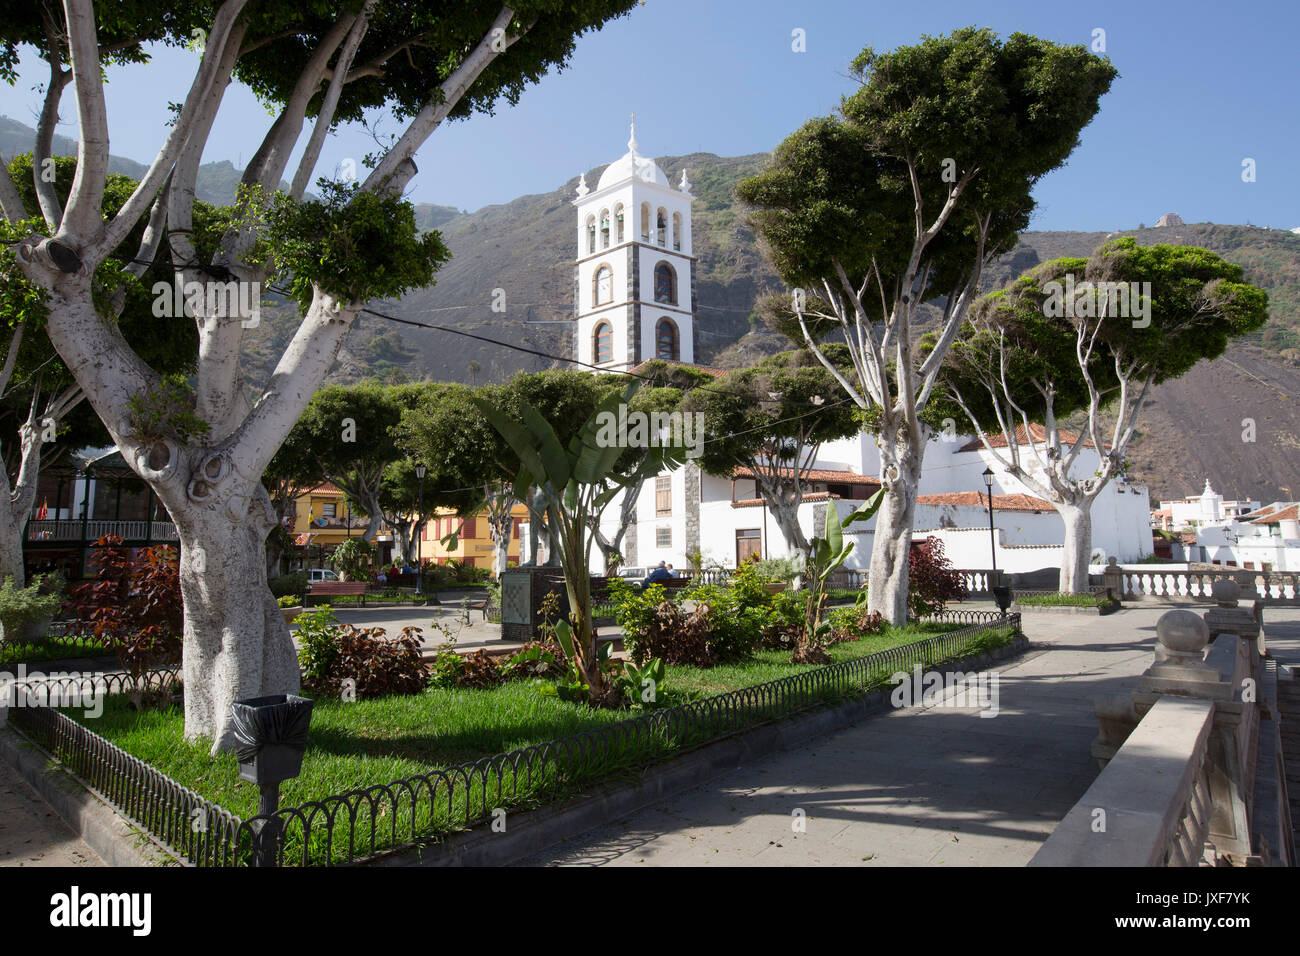 Plaza de la Libertad and the Church of Santa Ana in the town of Garachico in Tenerife, Canary Islands. Stock Photo